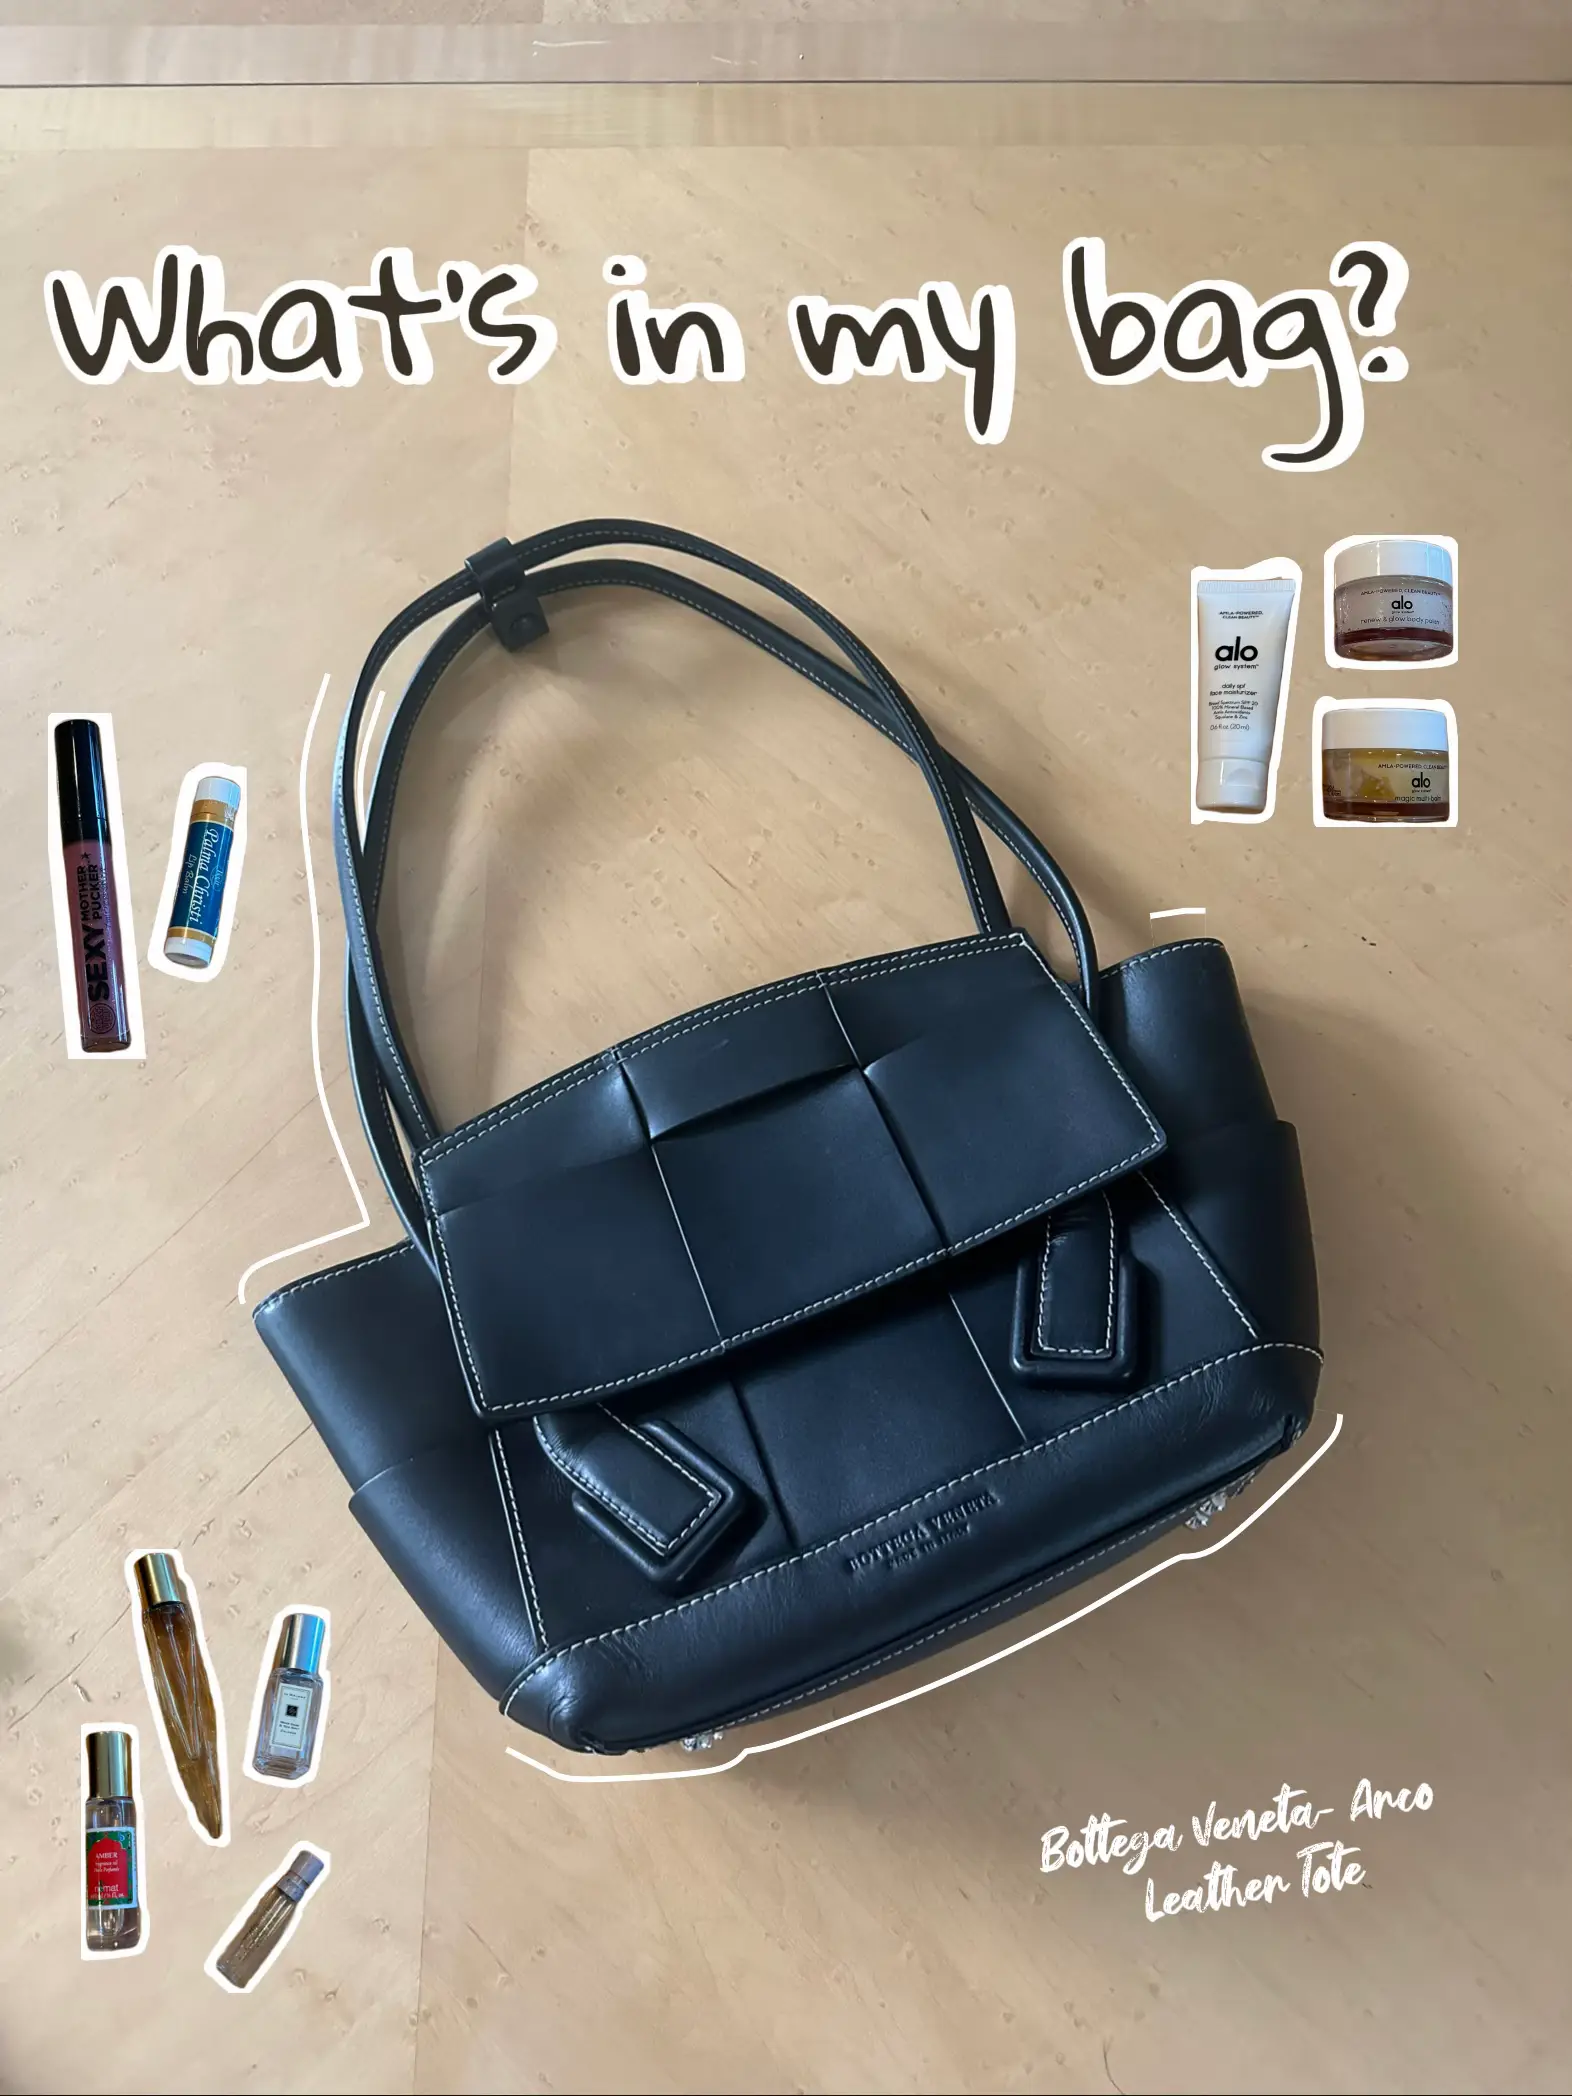 What's in my bag: Bottega Veneta 🛍✨🌟, Gallery posted by Naomi Golan